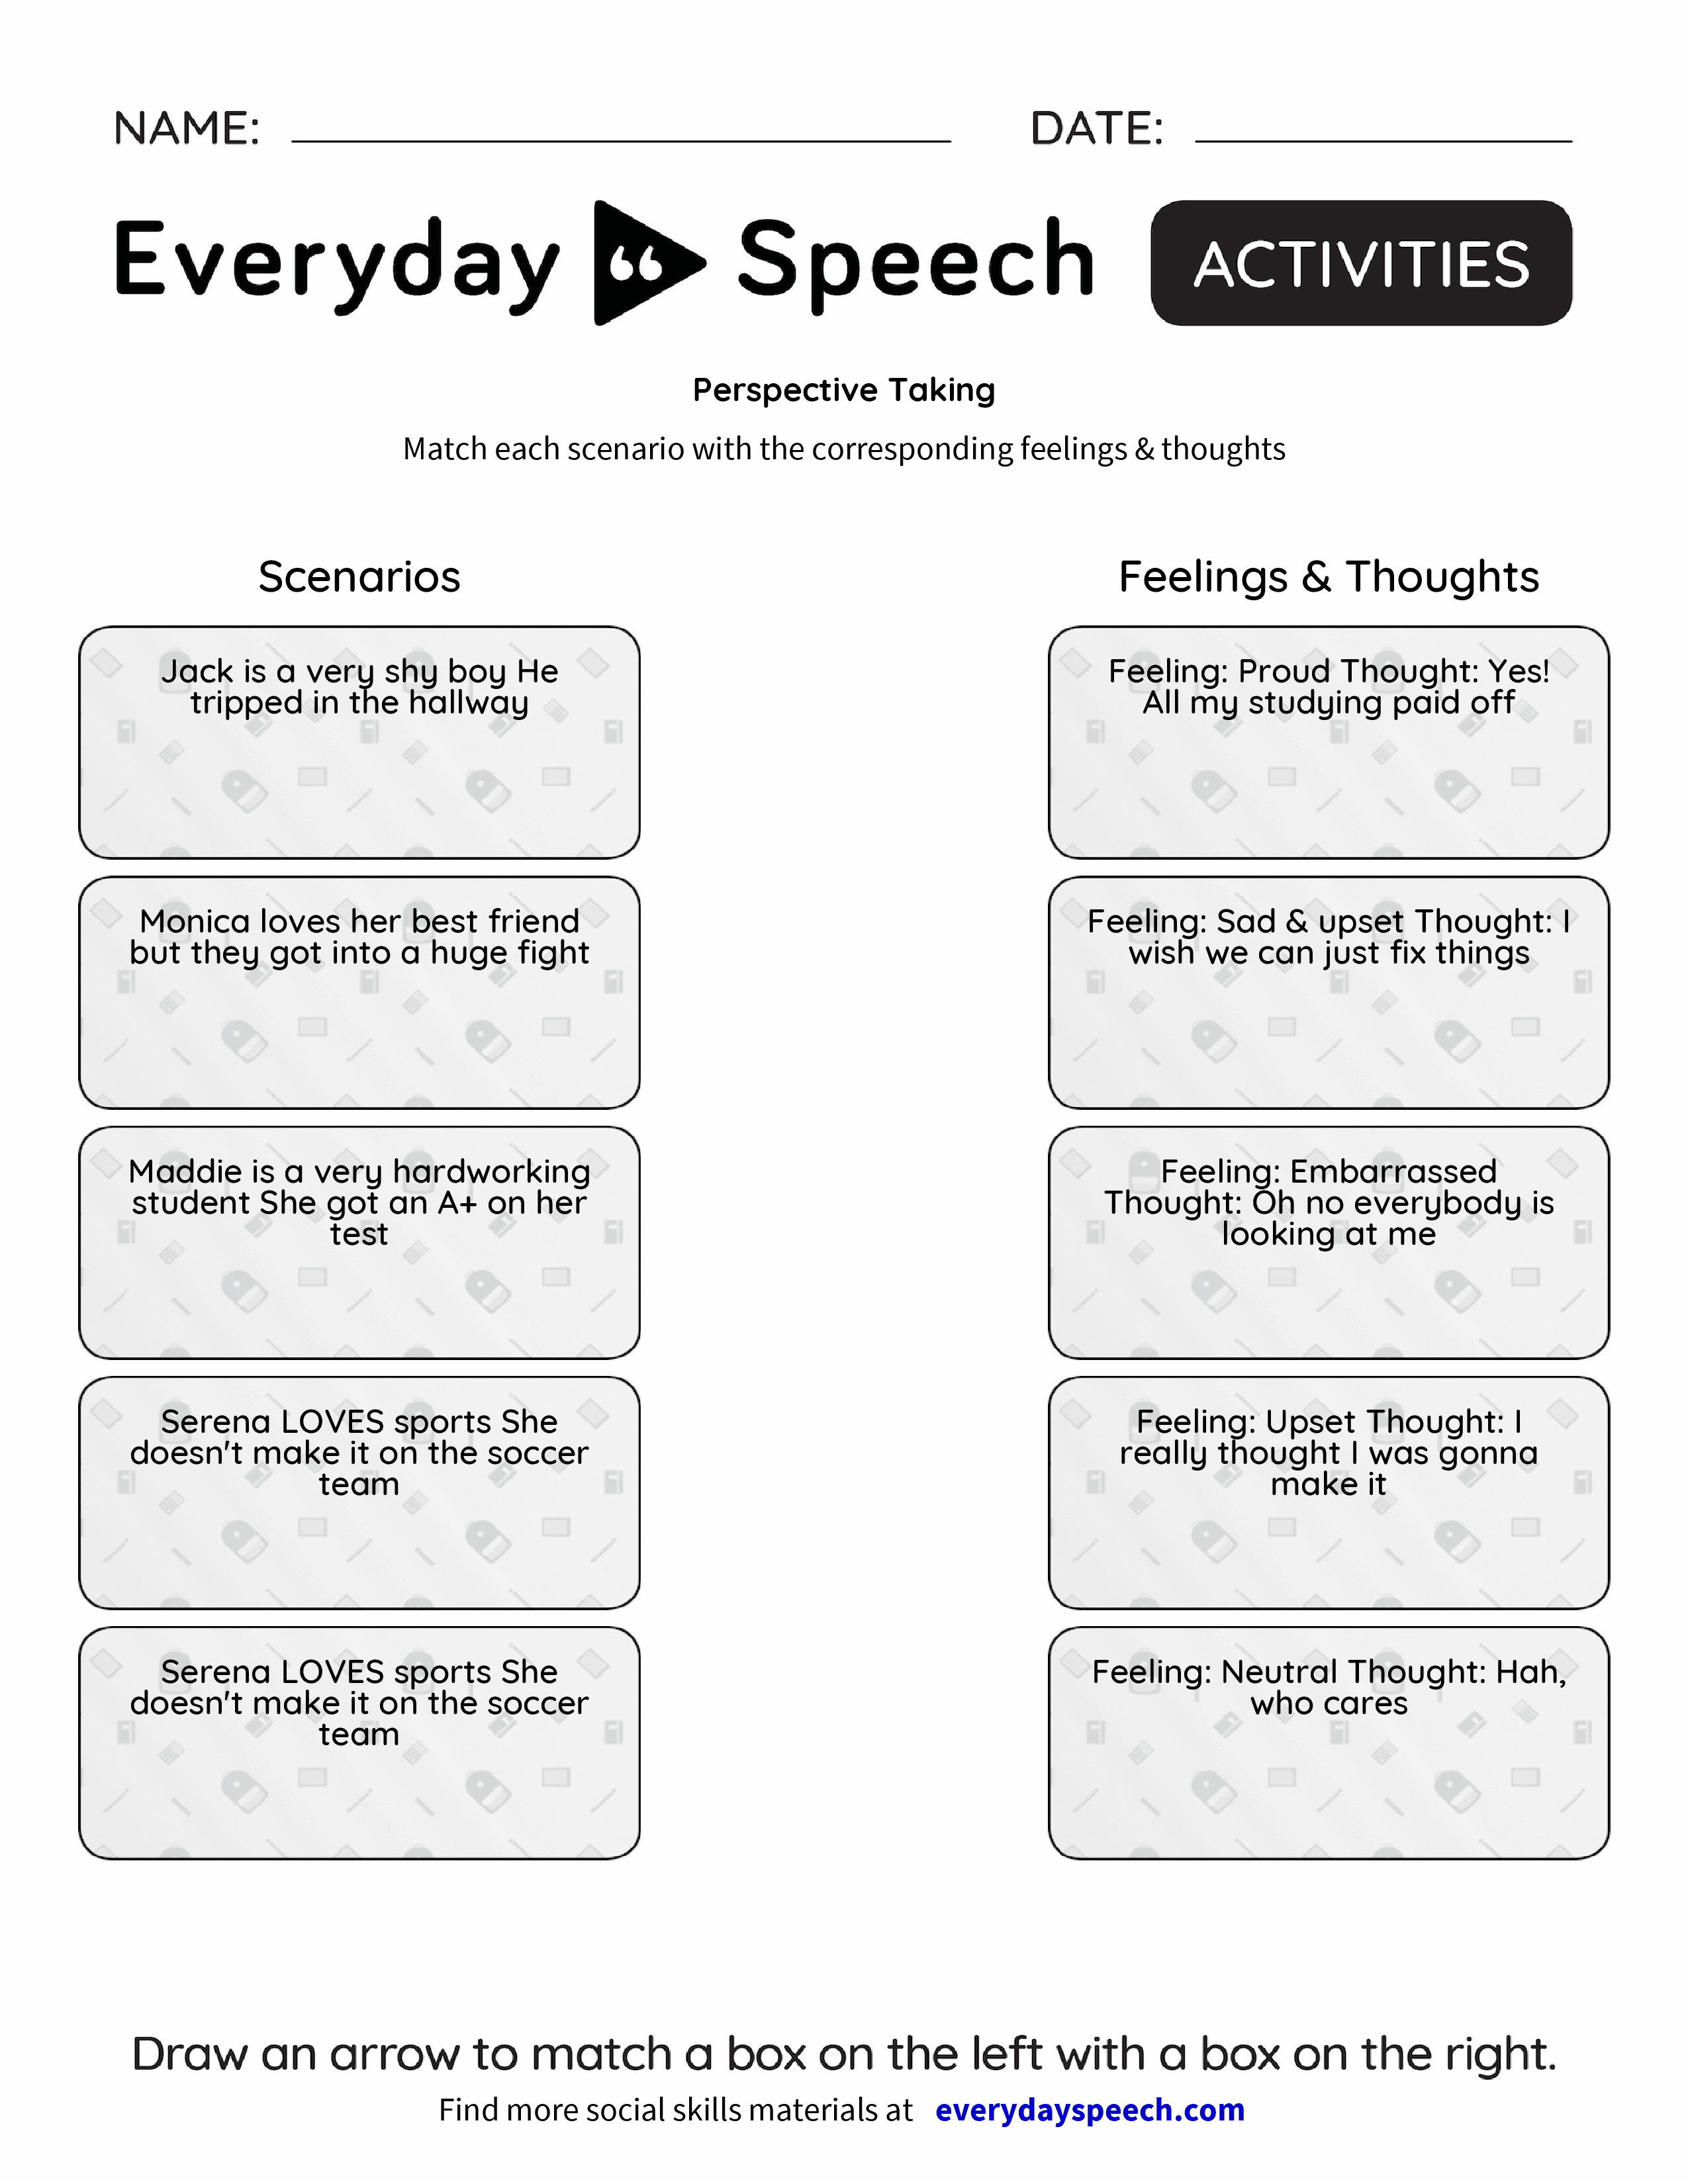 perspective-taking-everyday-speech-everyday-speech